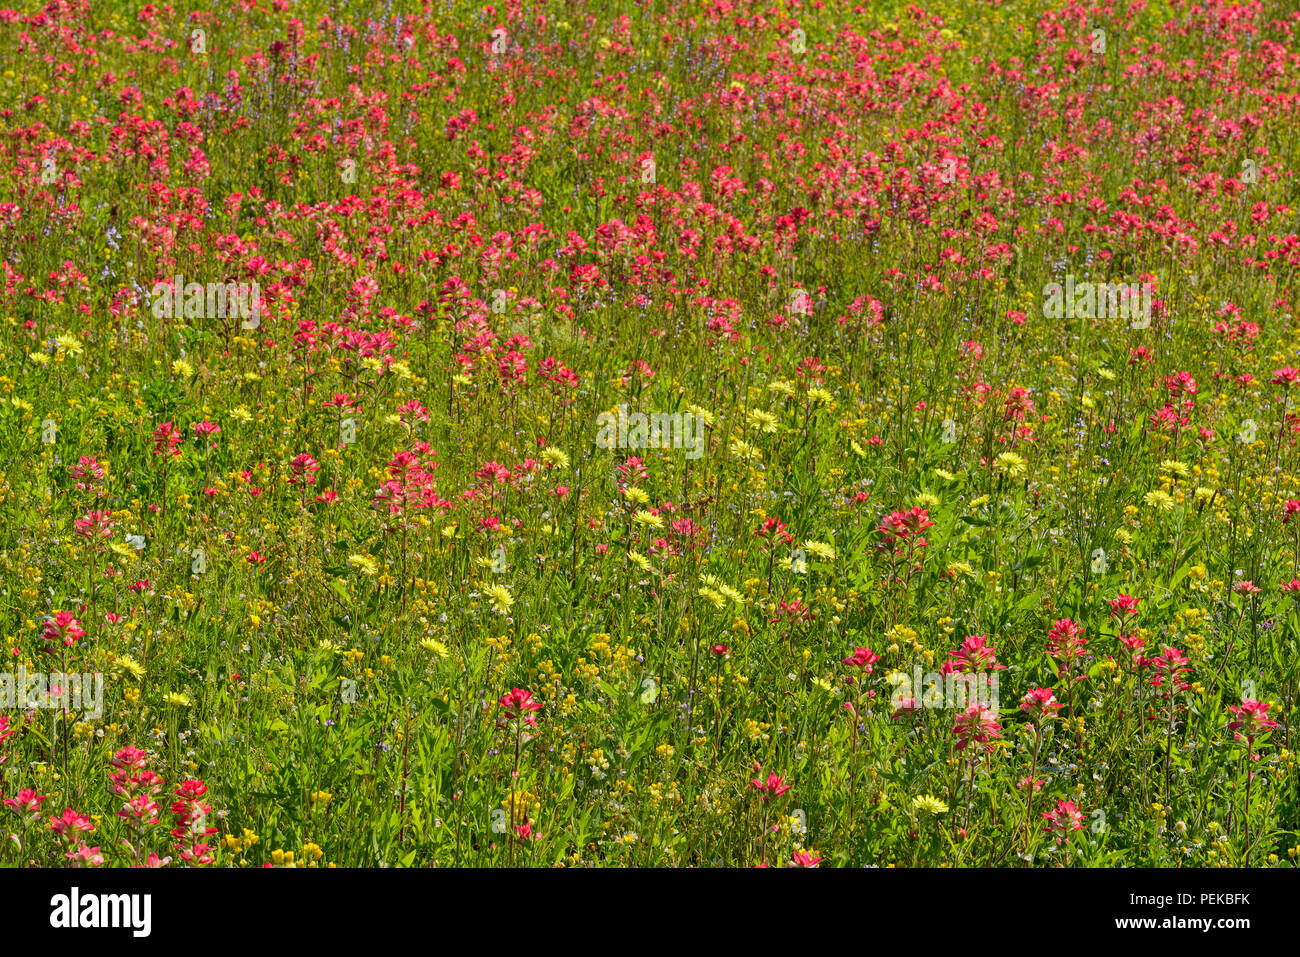 A field with wildflowers- Texas paintbrush (Castilleja spp.) and Texas Dandelion (Pyrrhopappus multicaulis), near Devine, Texas, USA Stock Photo